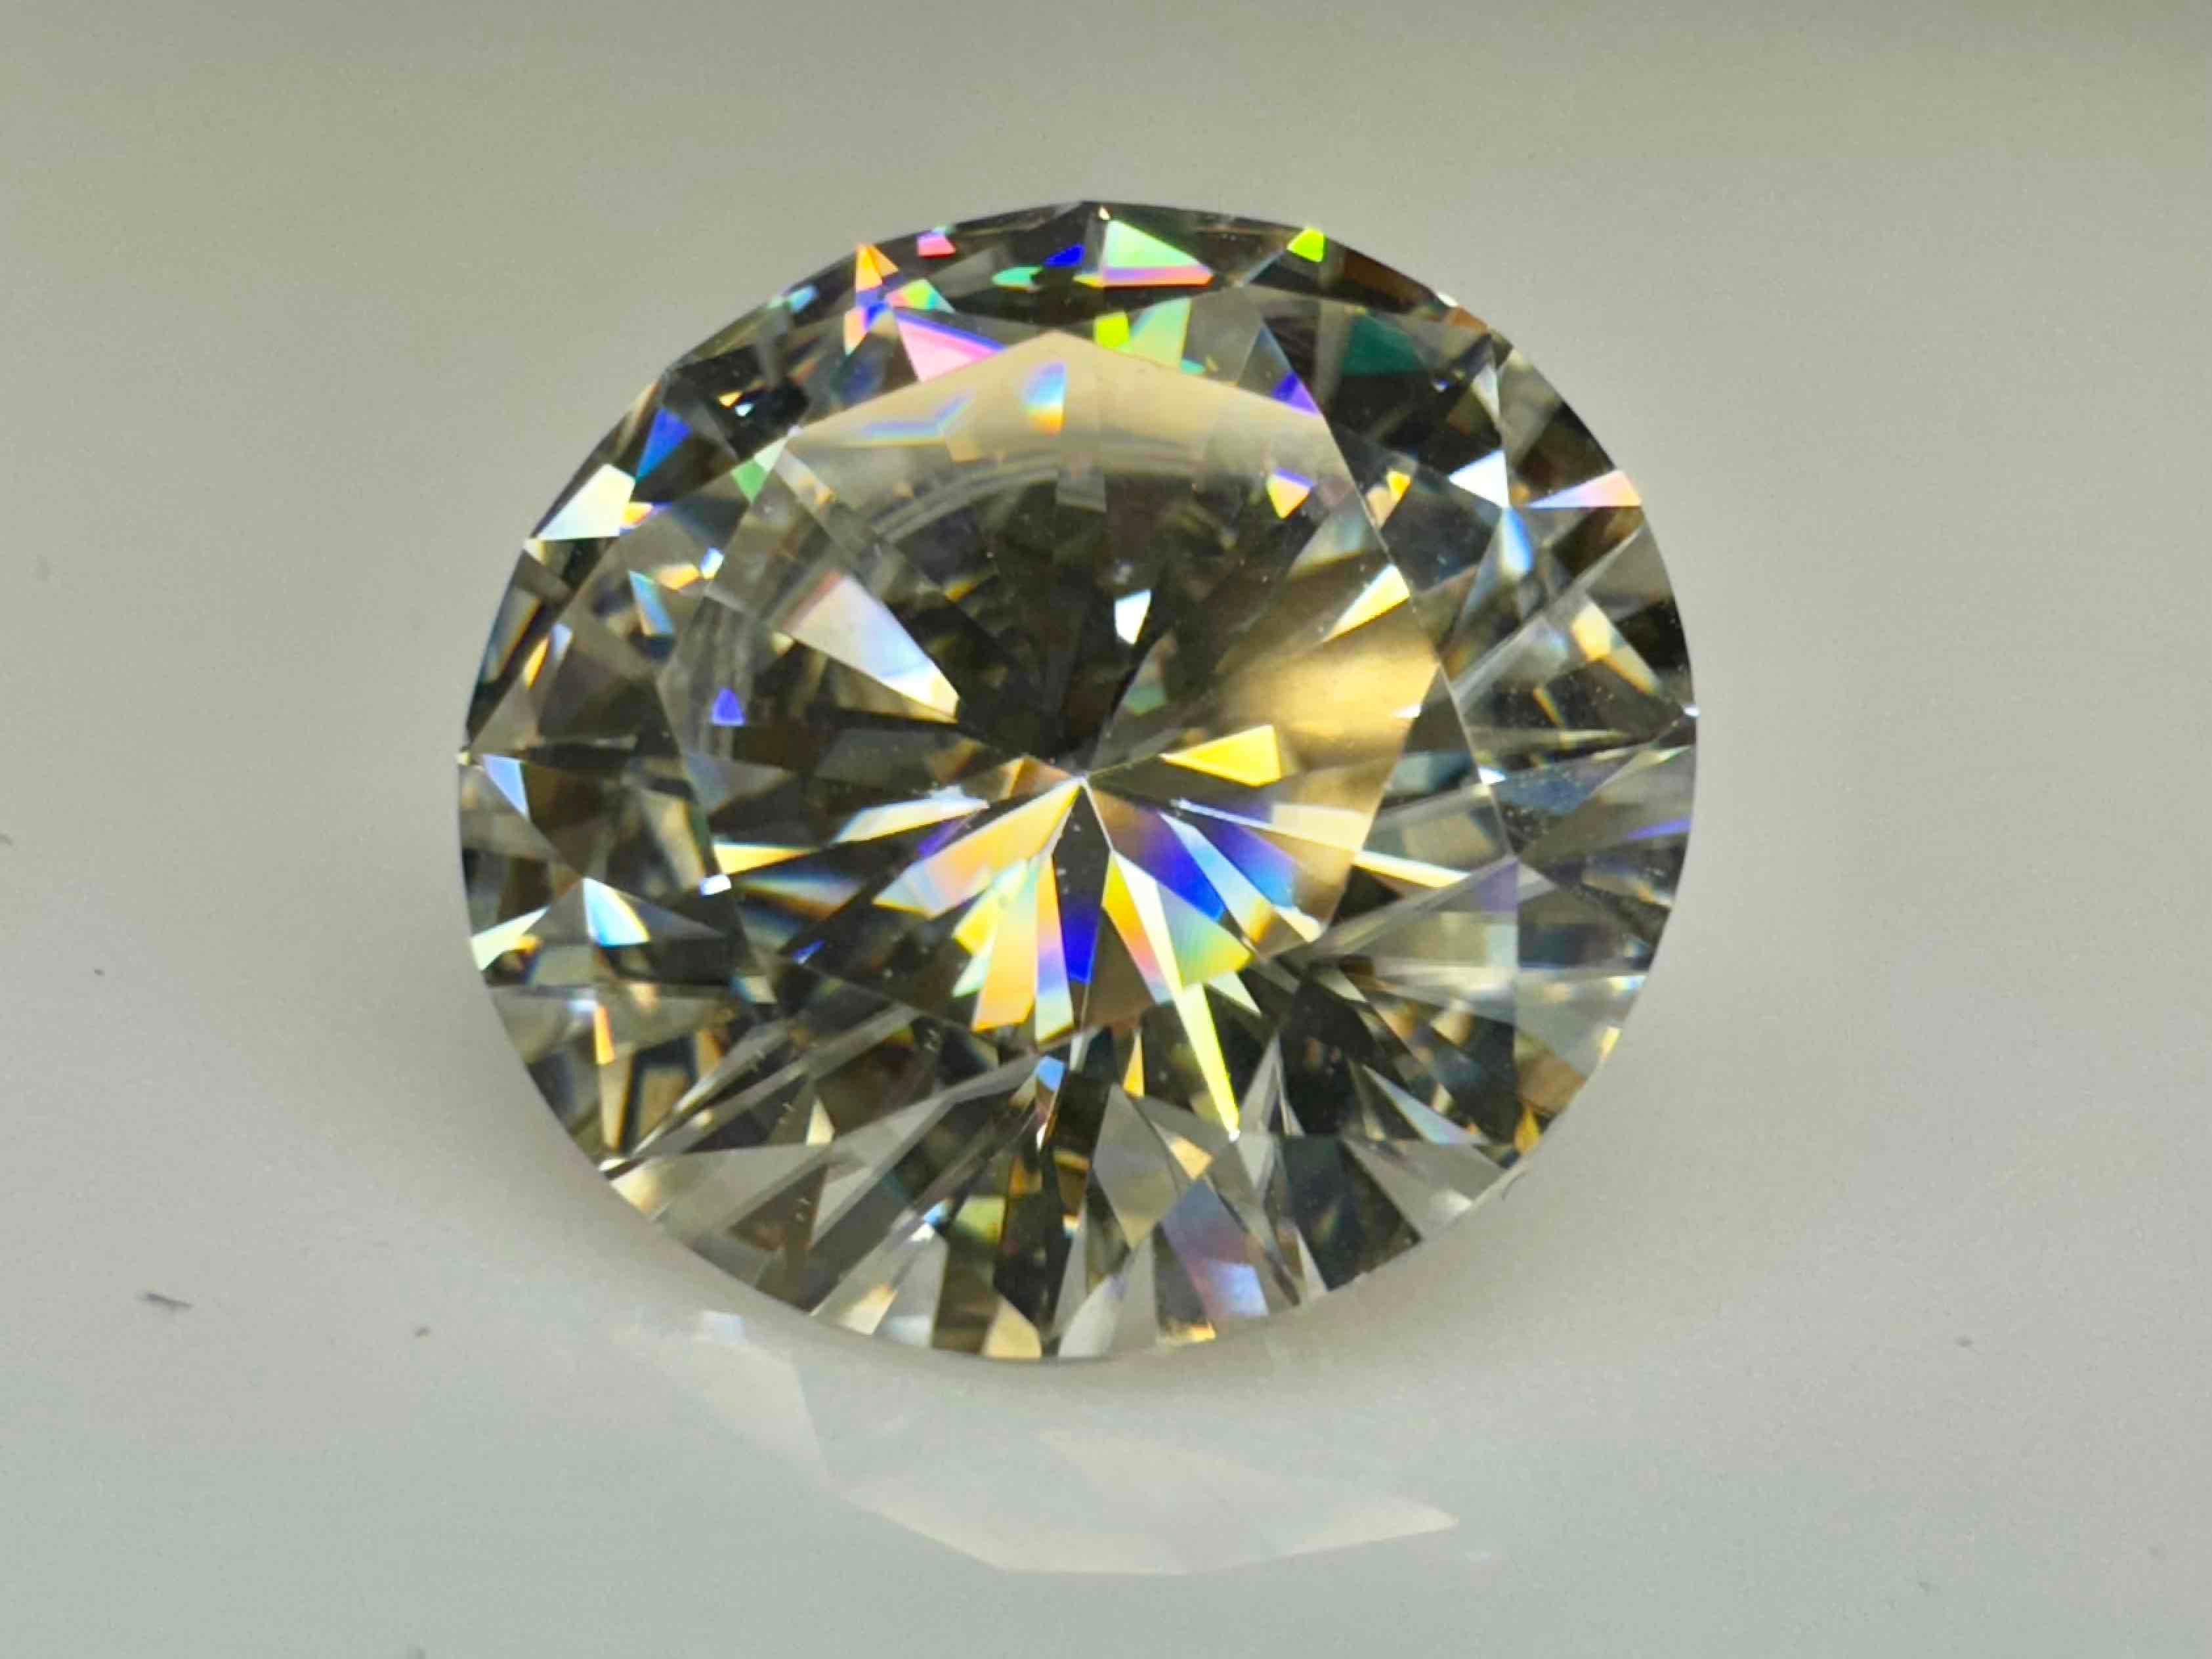 9.2ct Brilliant Cut Moissanite Diamond Gemstone with GRA Certificate